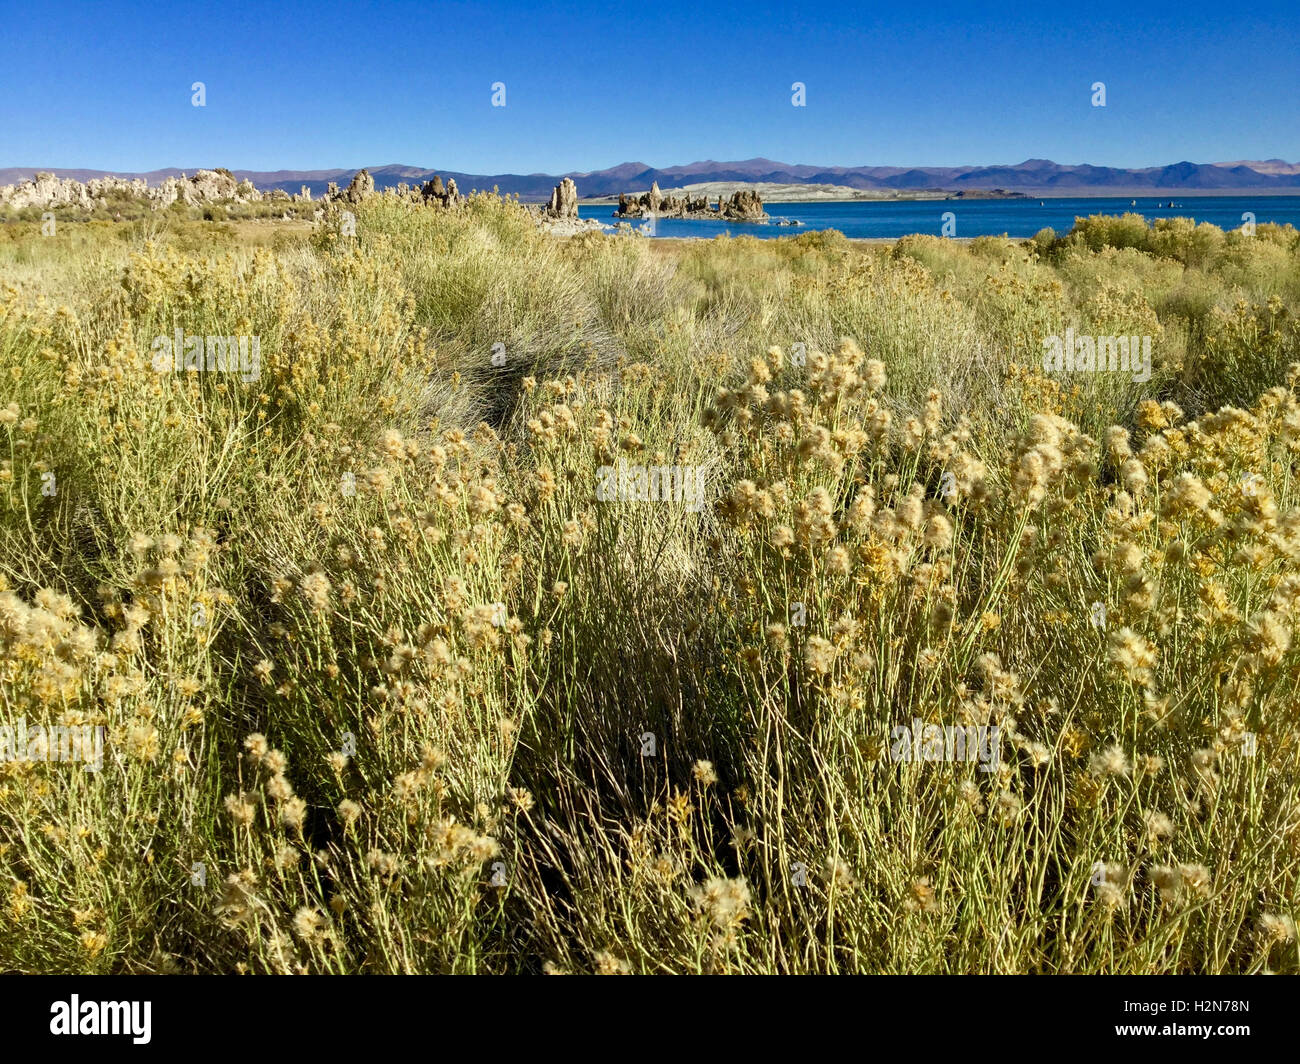 Scenic view of the desert vegetation and Tufa towers at Mono Lake, California Stock Photo